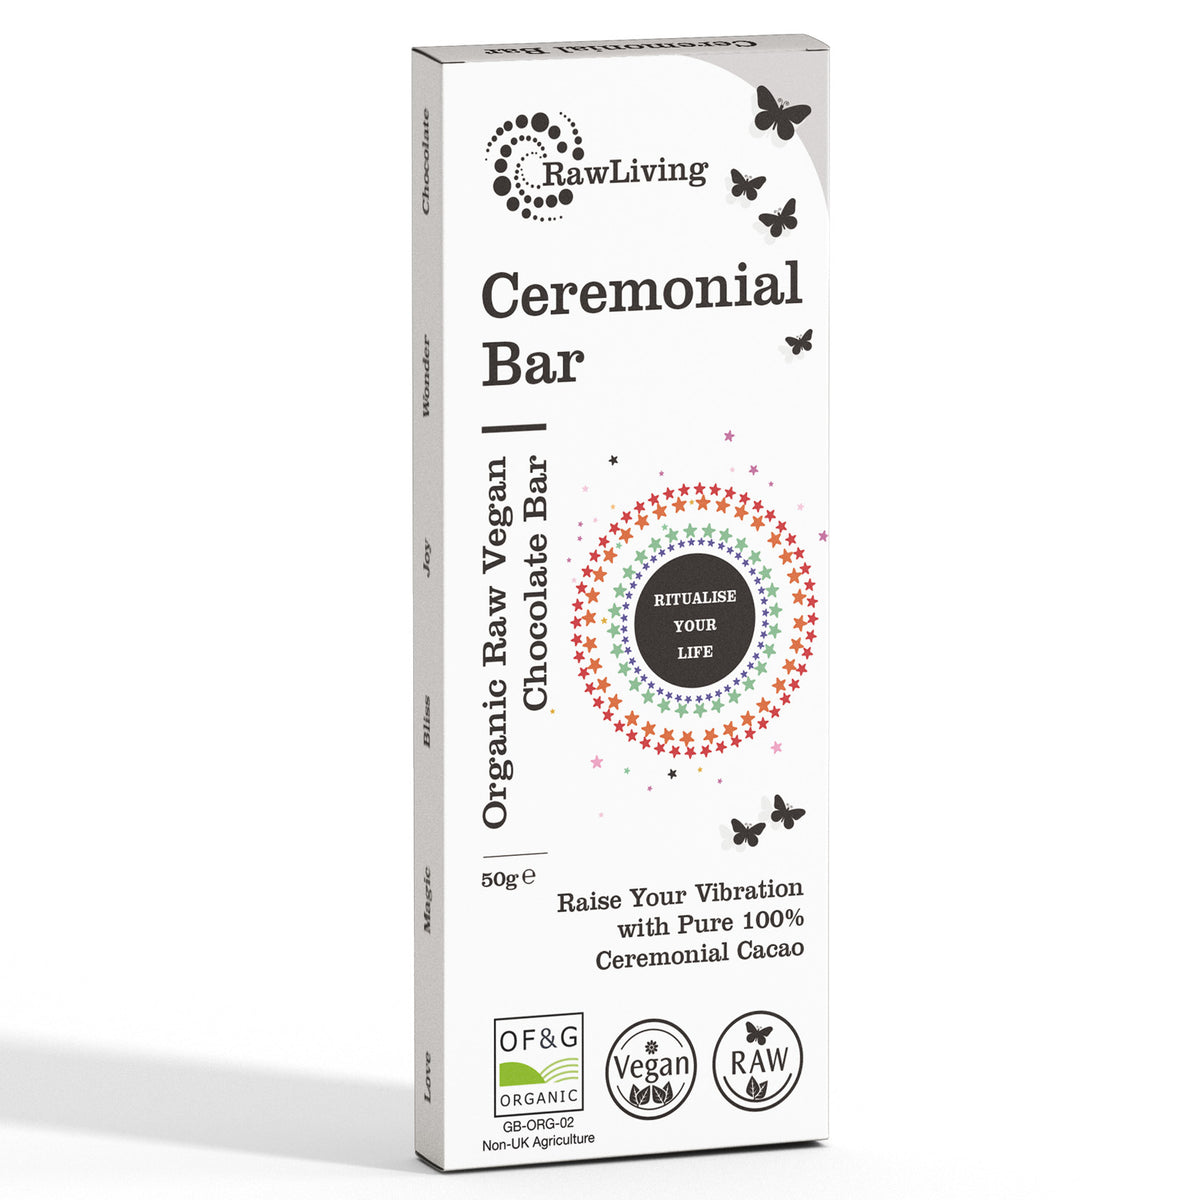 Ceremonial Organic Raw Chocolate Bar (50g)